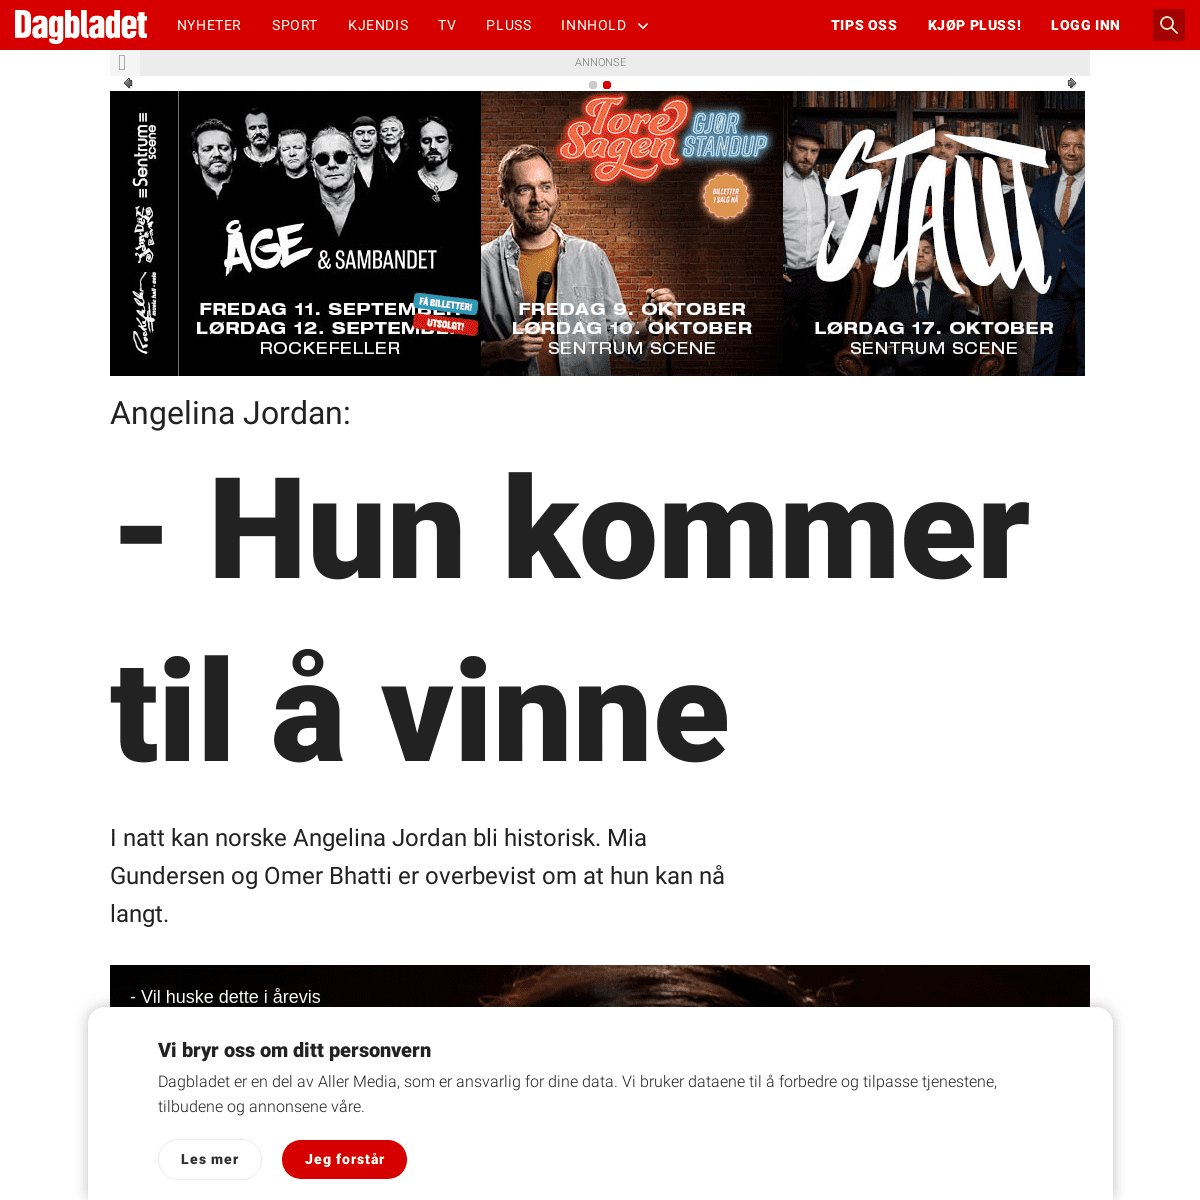 A complete backup of www.dagbladet.no/kjendis/hun-kommer-til-a-vinne/72150344